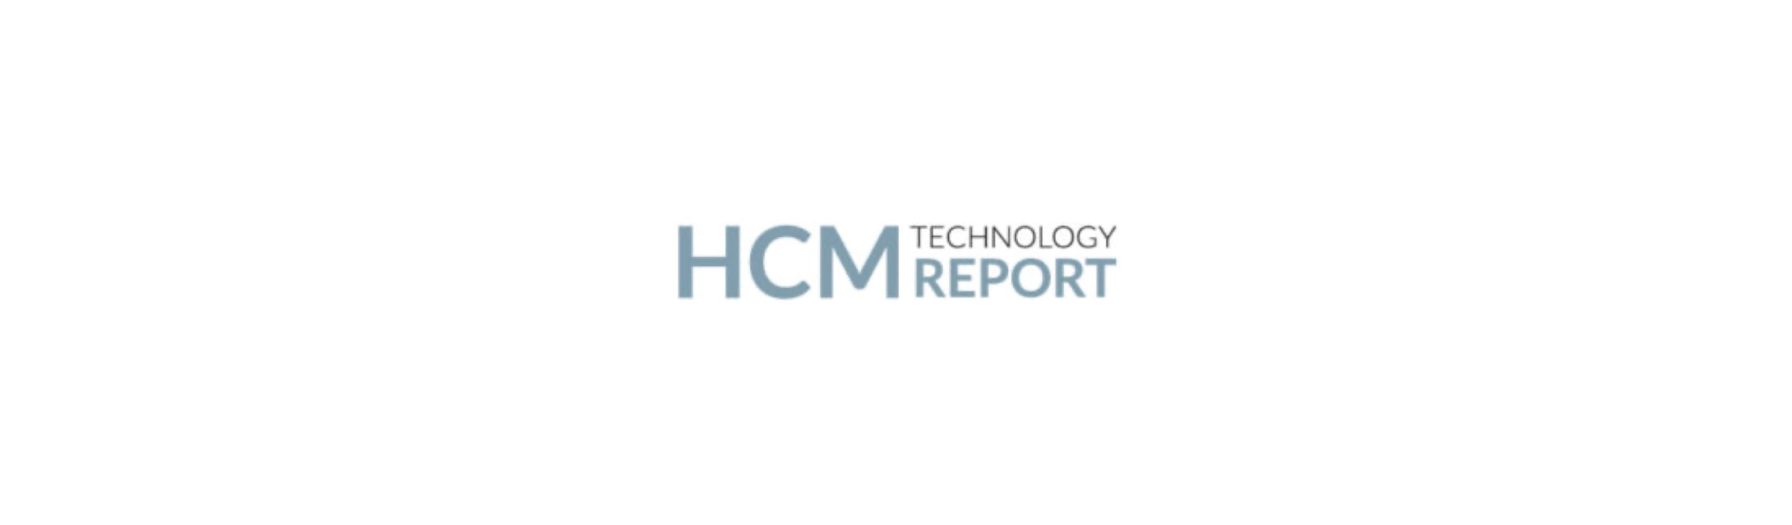  HCM Technology Report logo